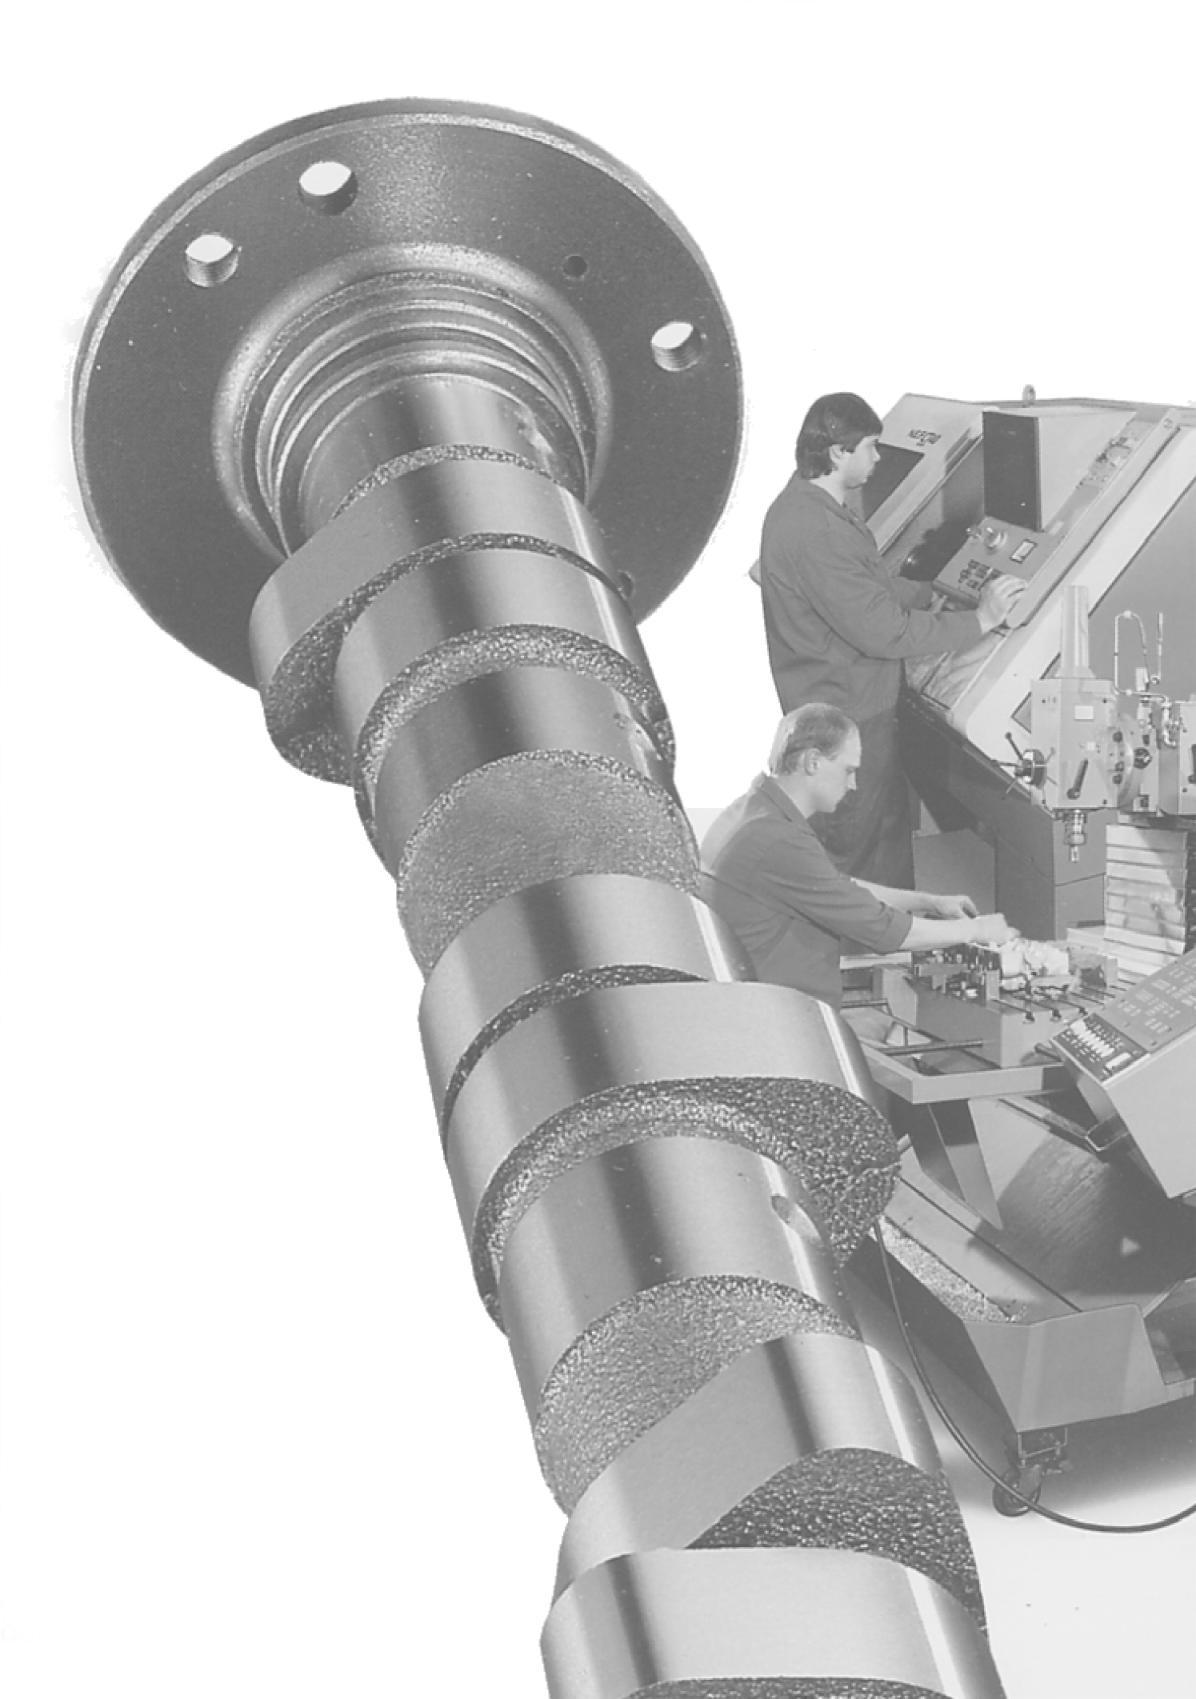 01-07 - 1.000 - CFV CAMS F1 Combustion engines Engine-parts Development Motor Kits Motor Sport Design Via S.